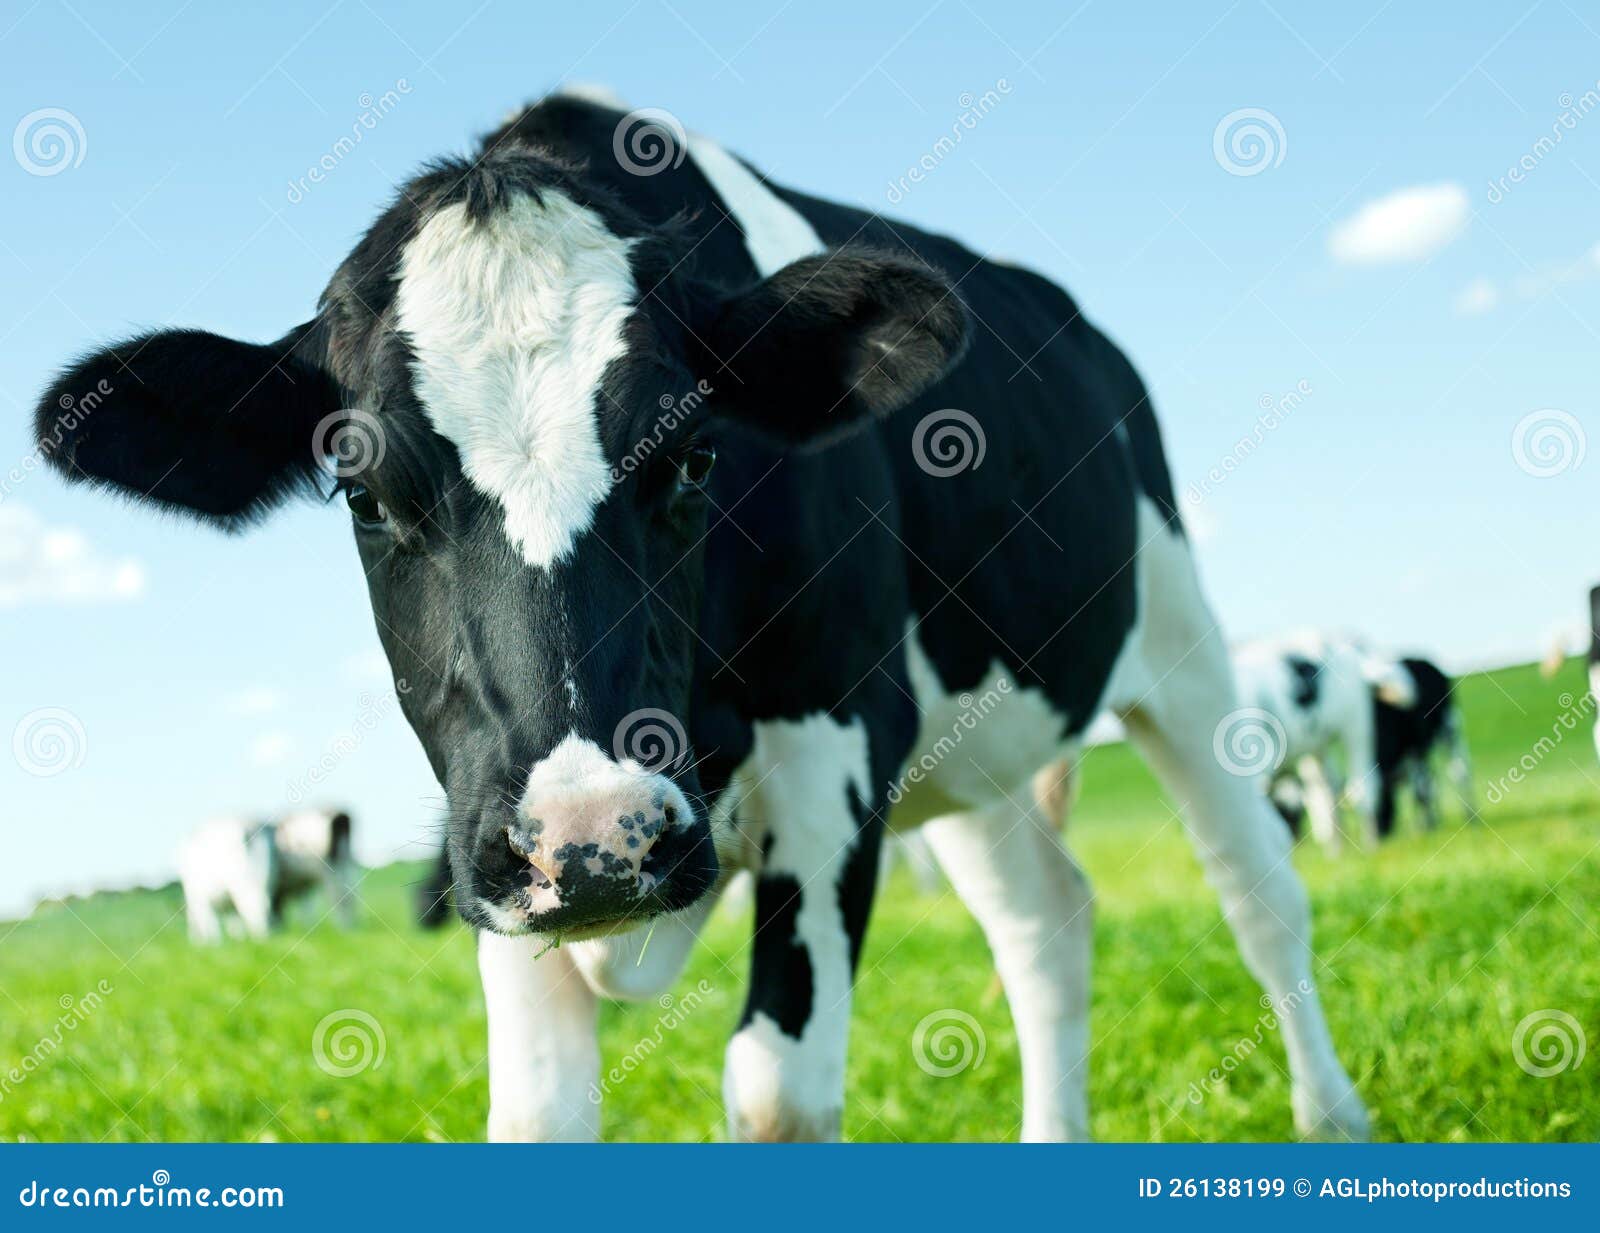 holstein friesian cow close-up